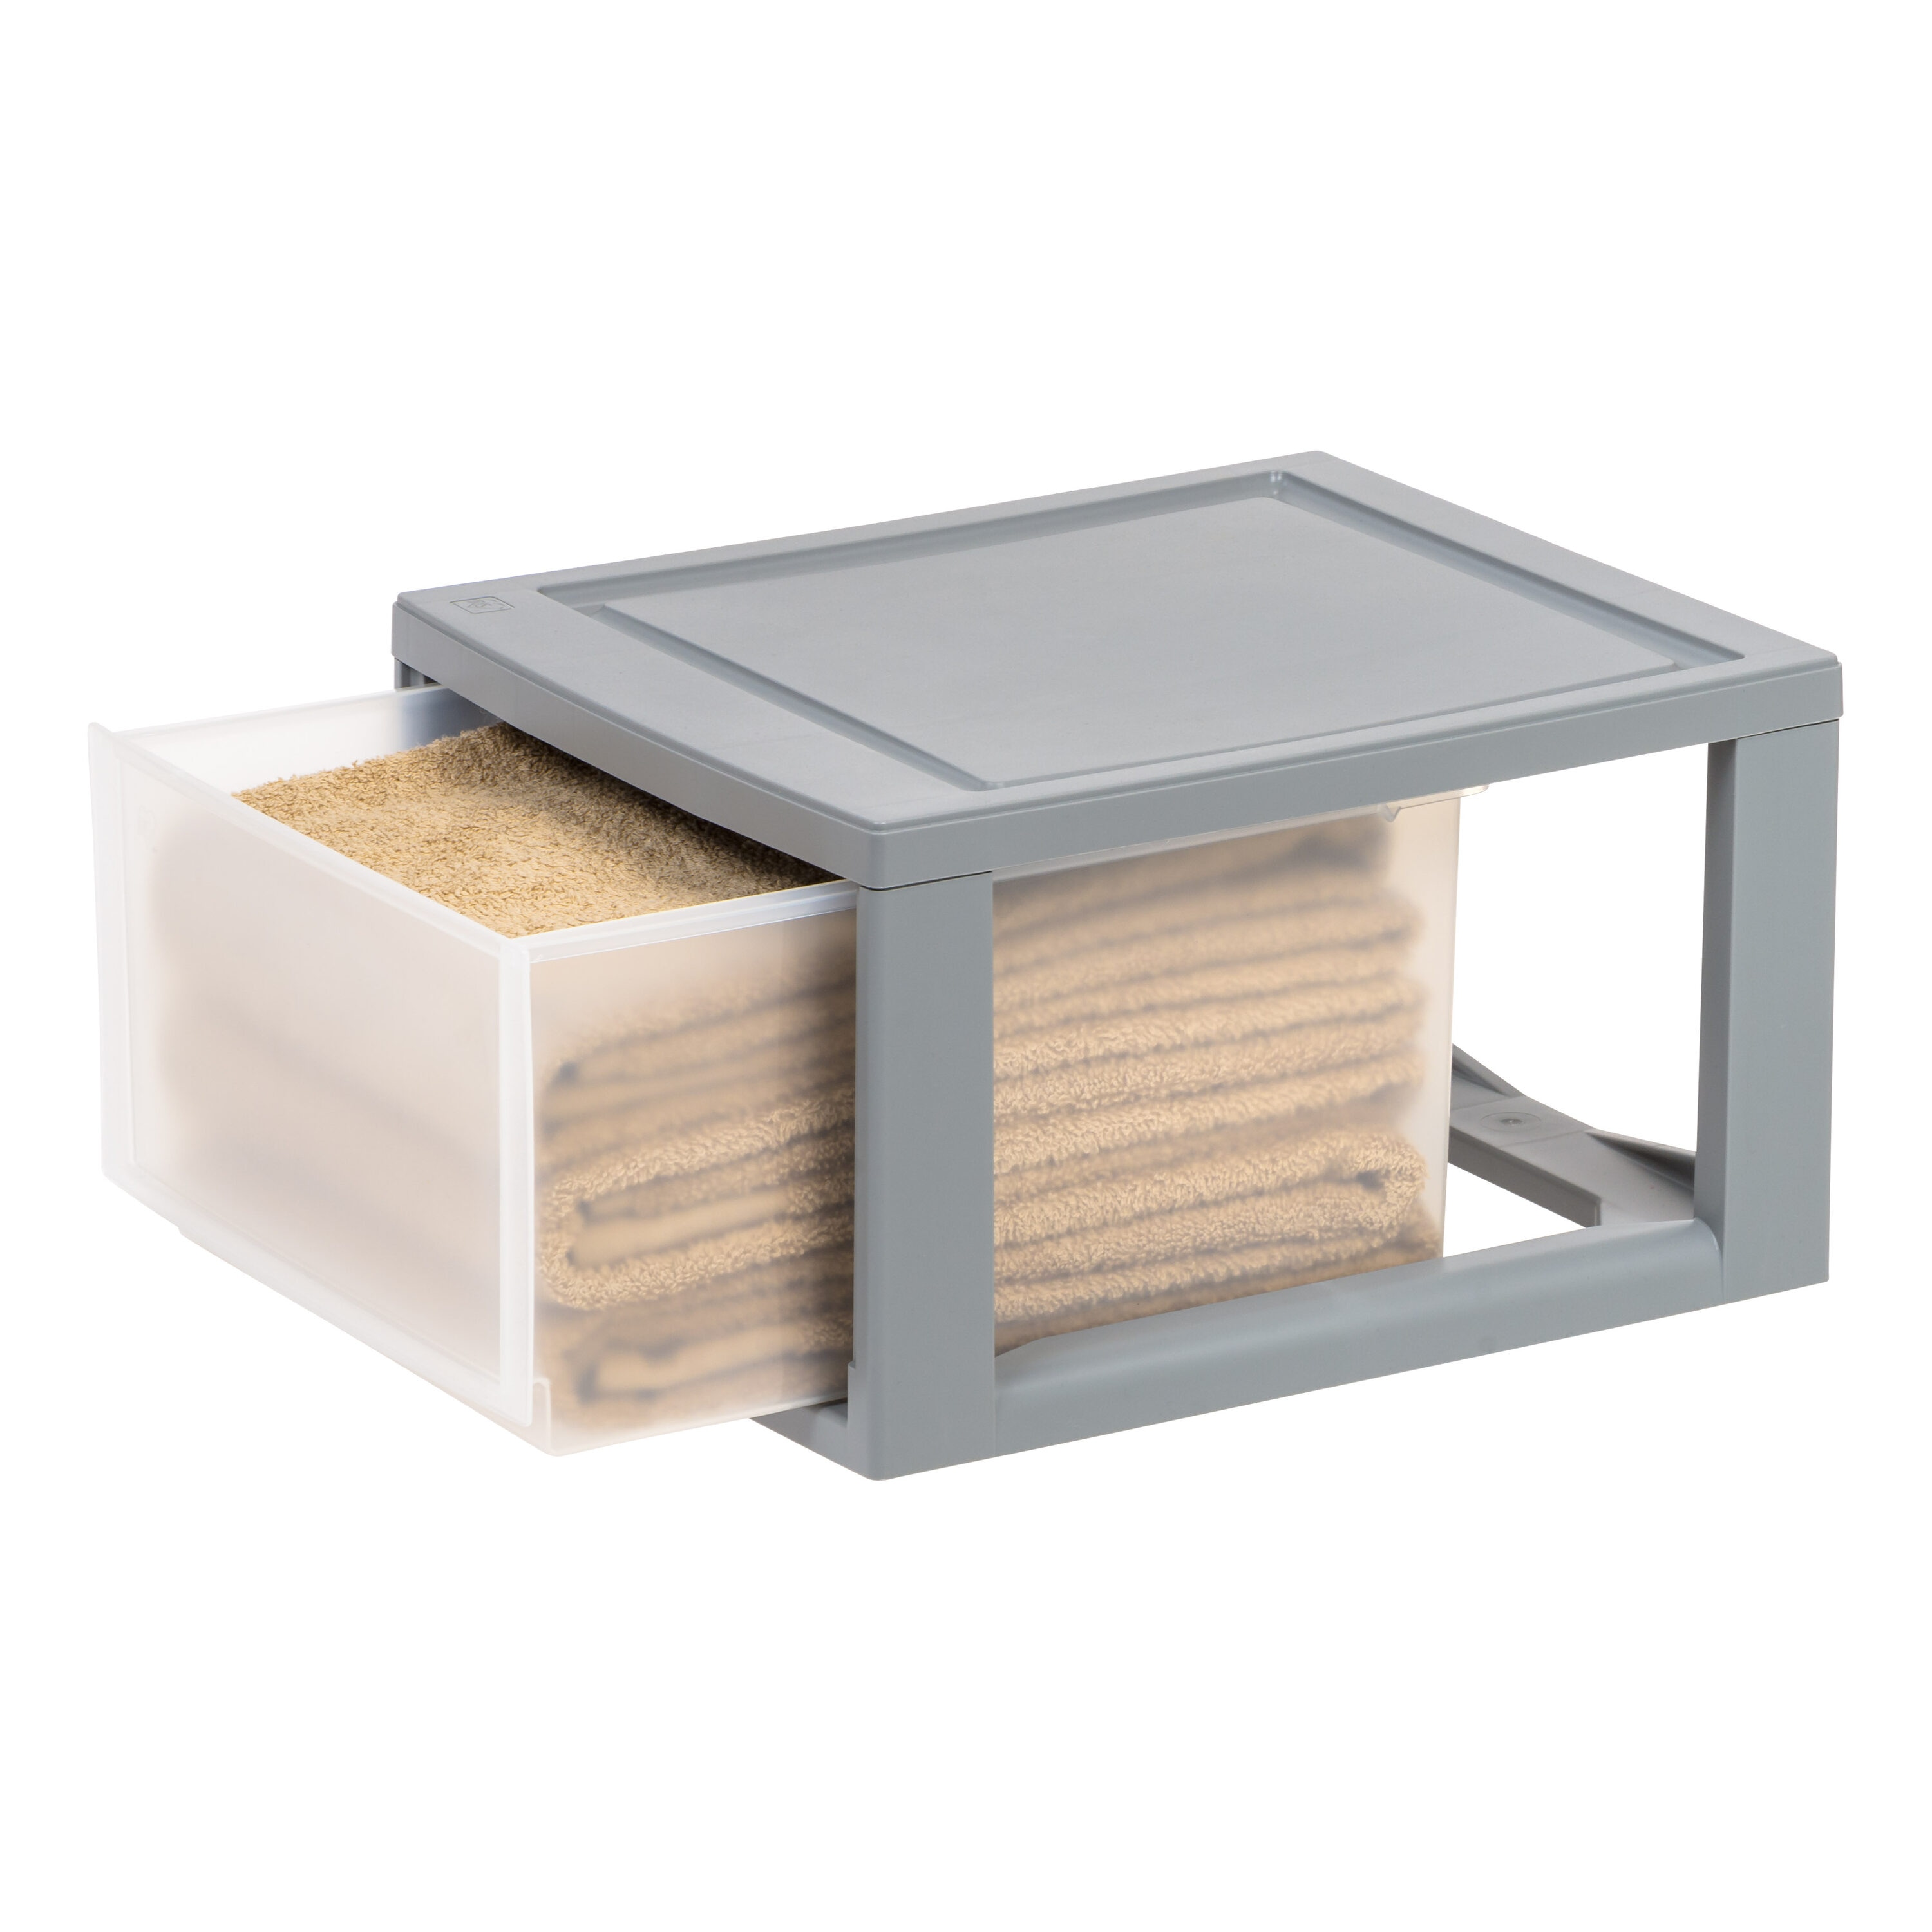 IRIS USA 6 Quart Stackable Storage Drawer, Plastic Drawer